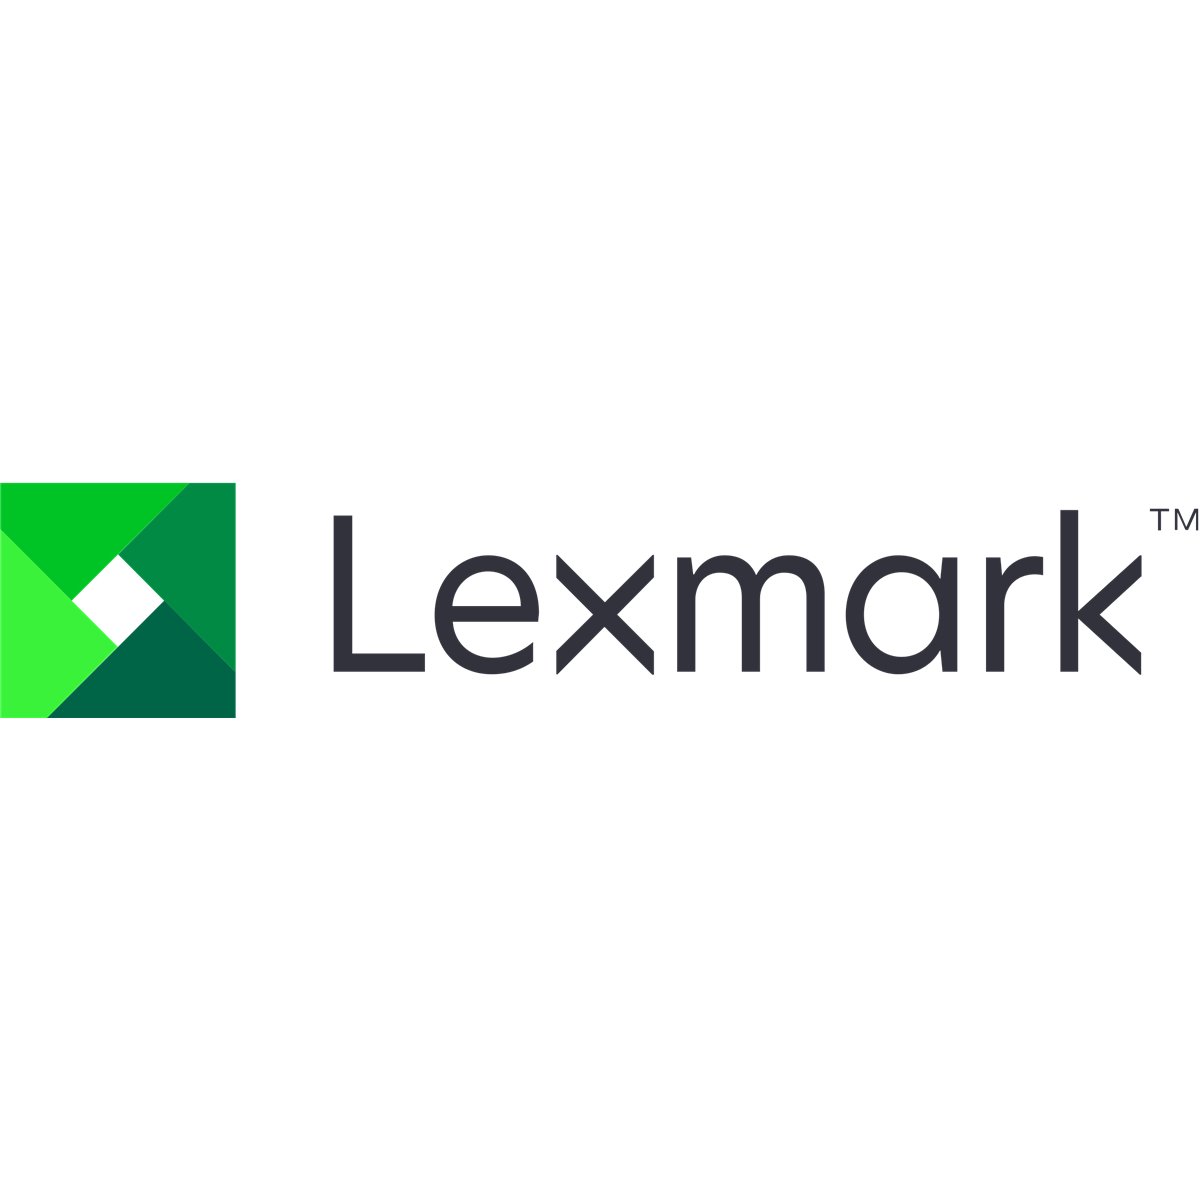 Lexmark Op Panel Universal